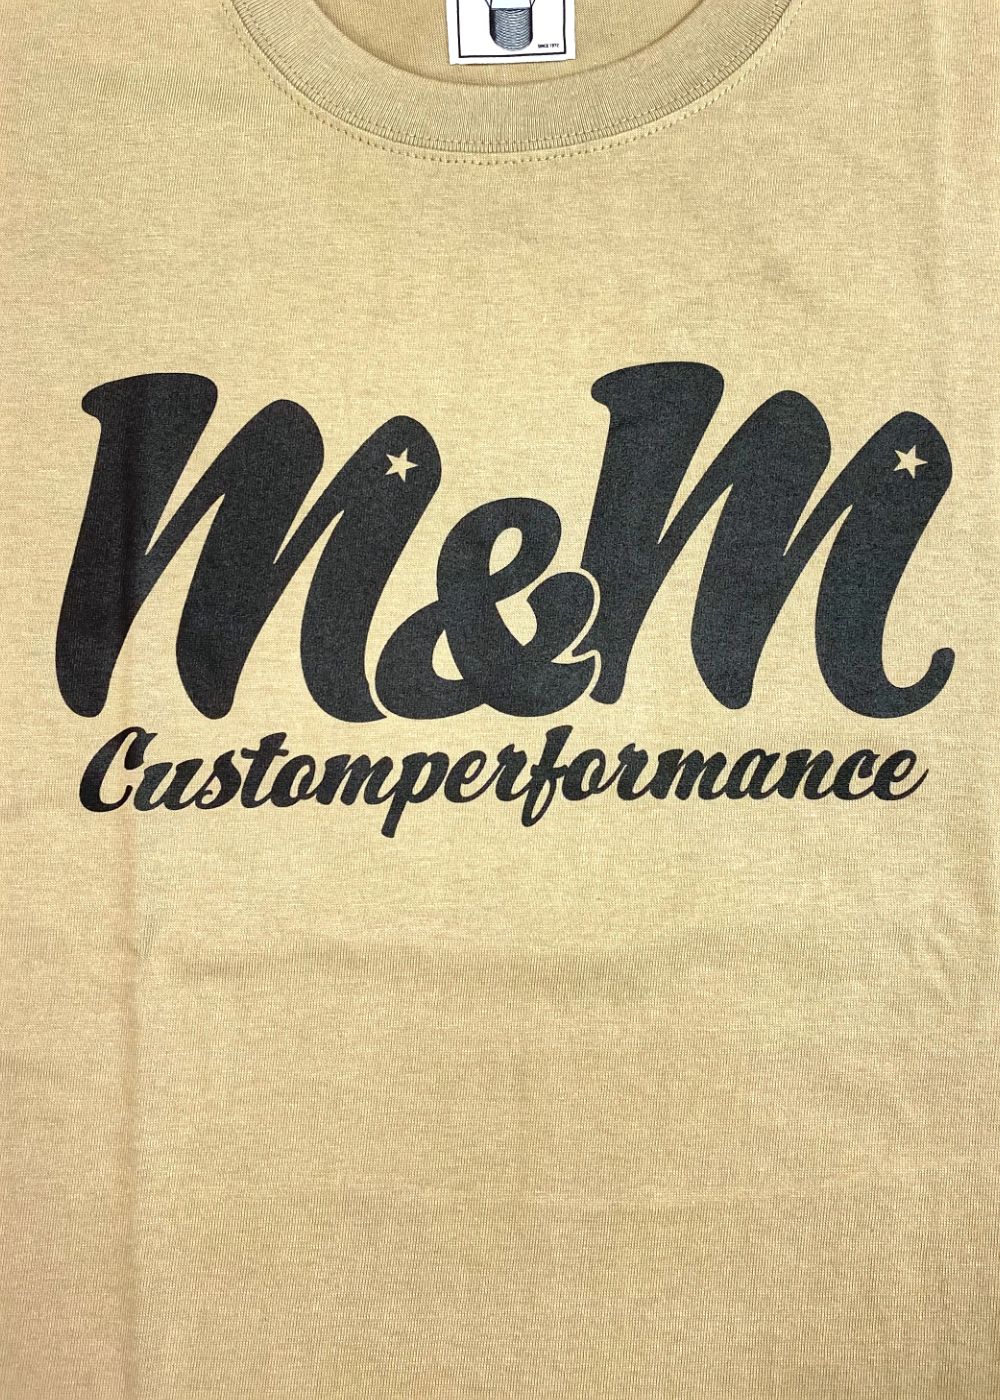 M&M CUSTOM PERFORMANCE Tシャツ キャメルM